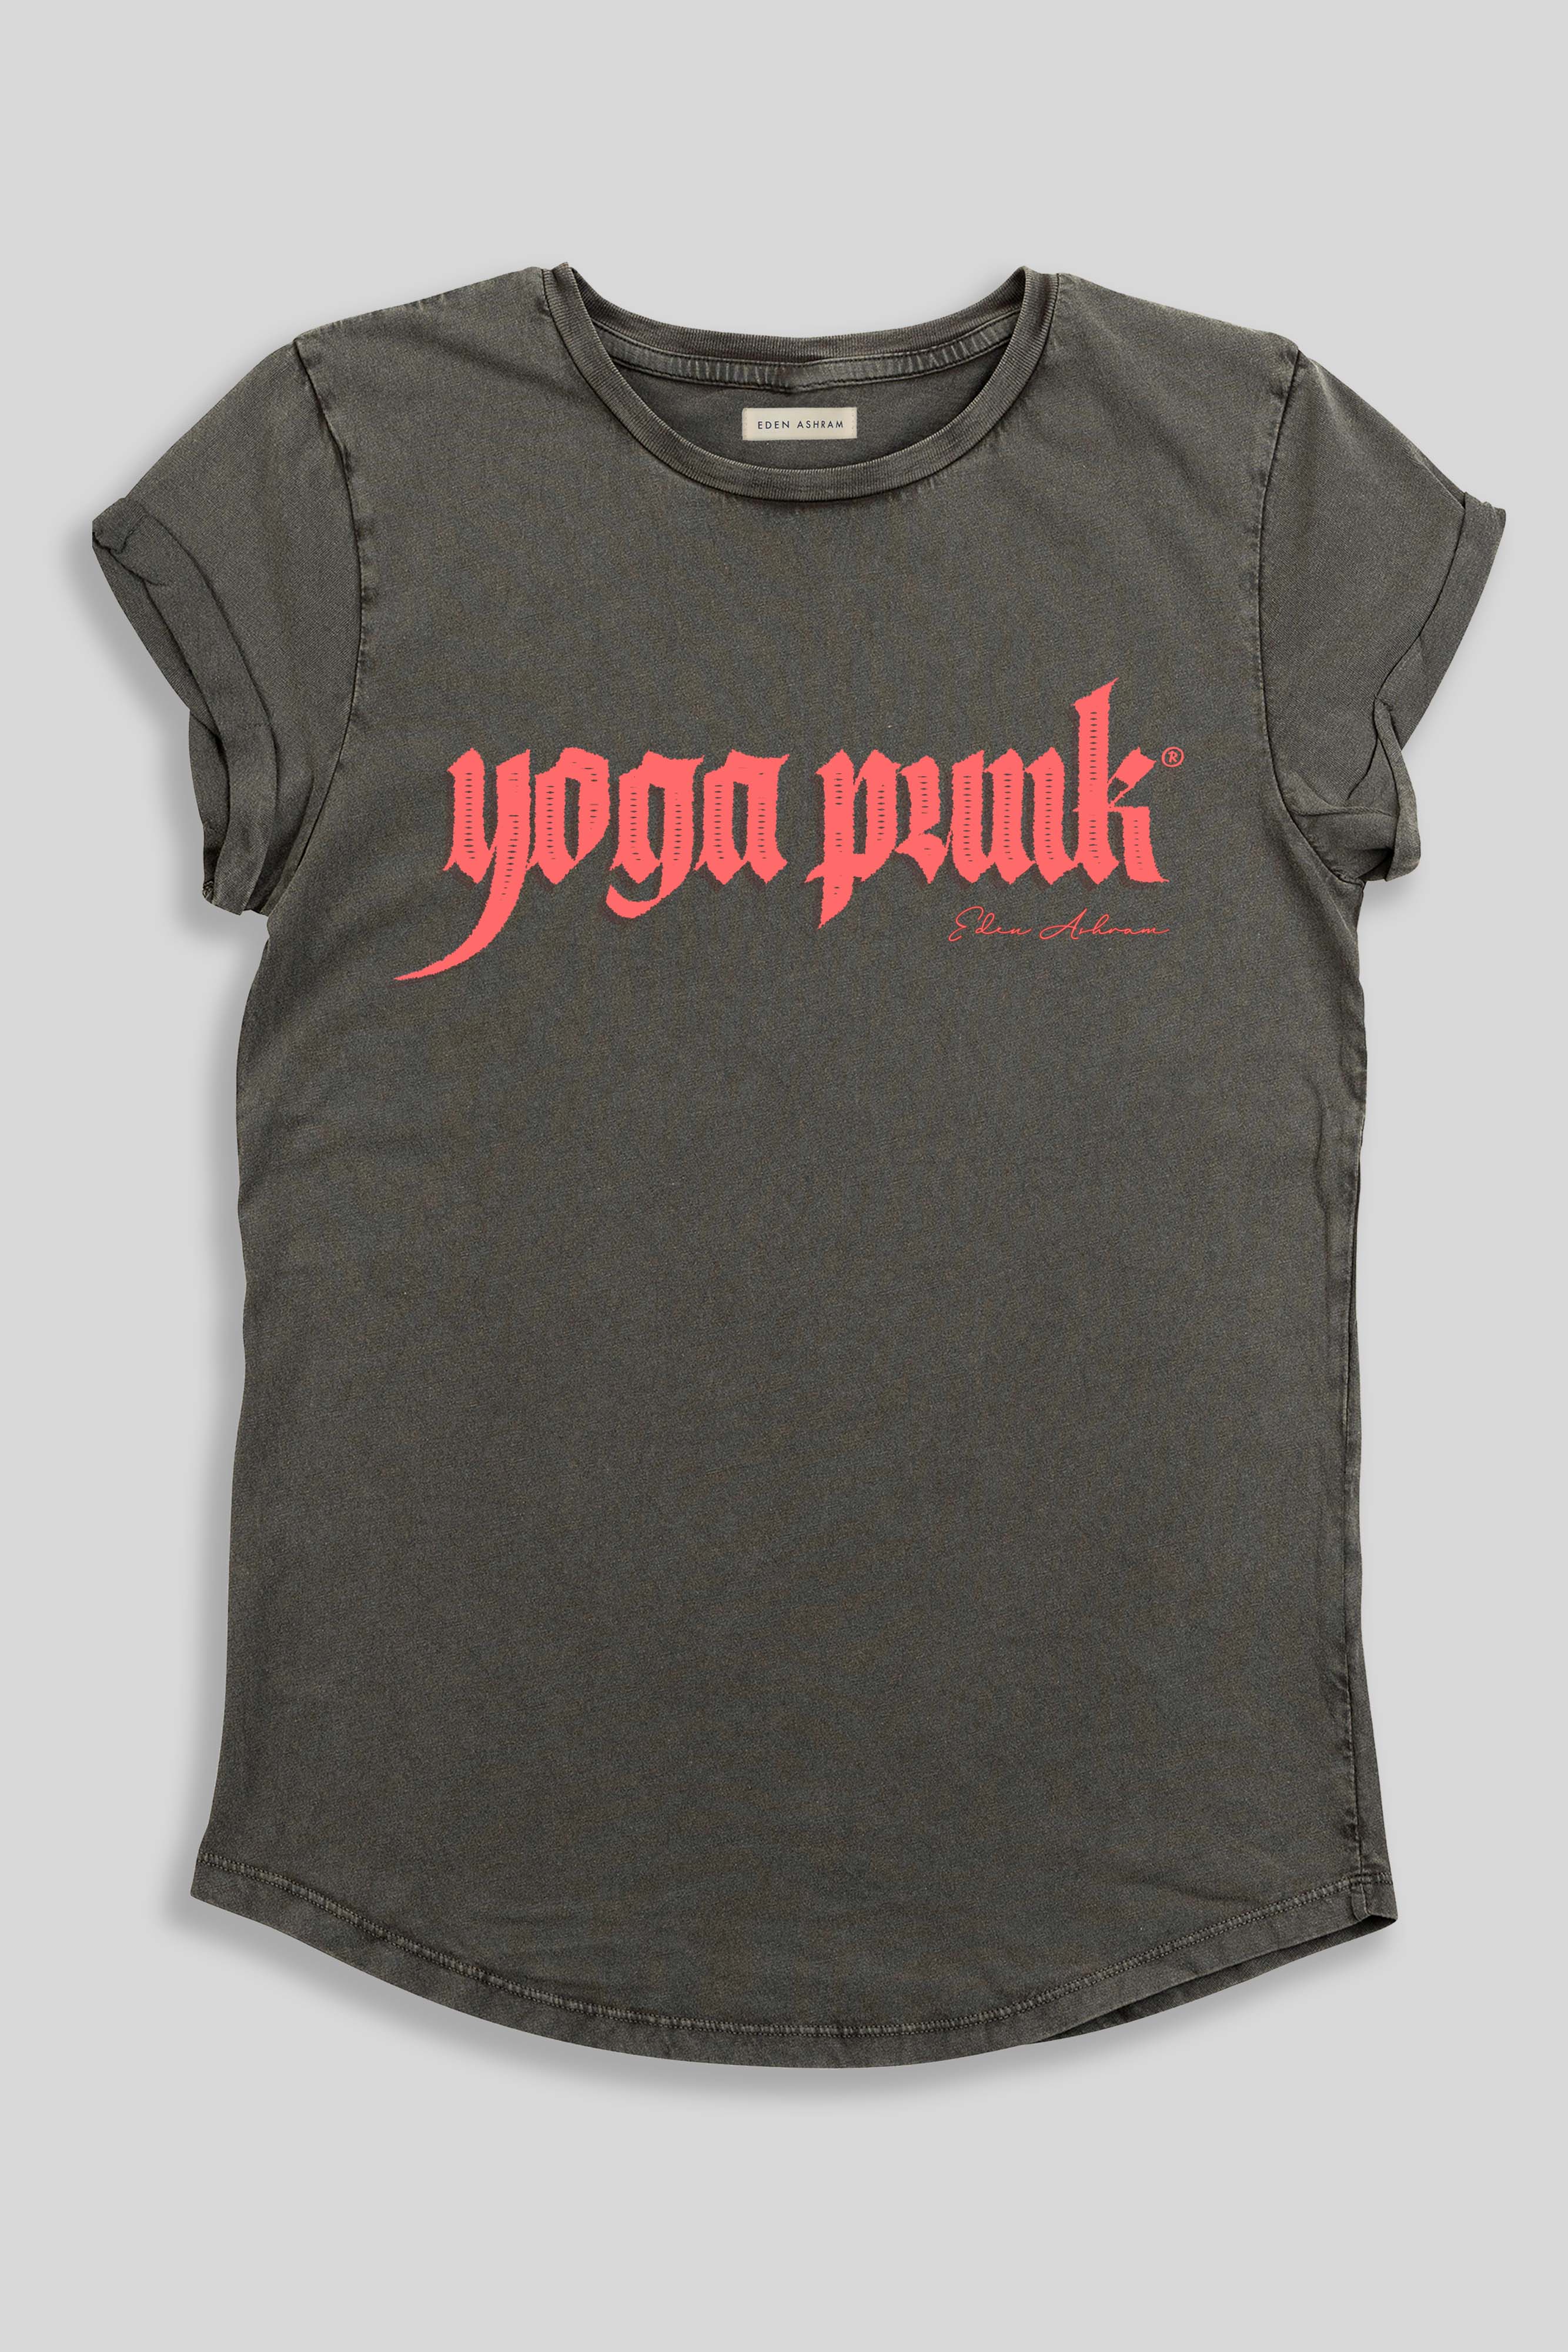 EDEN ASHRAM Yoga Punk Rolled Sleeve T-Shirt Stonewash Grey